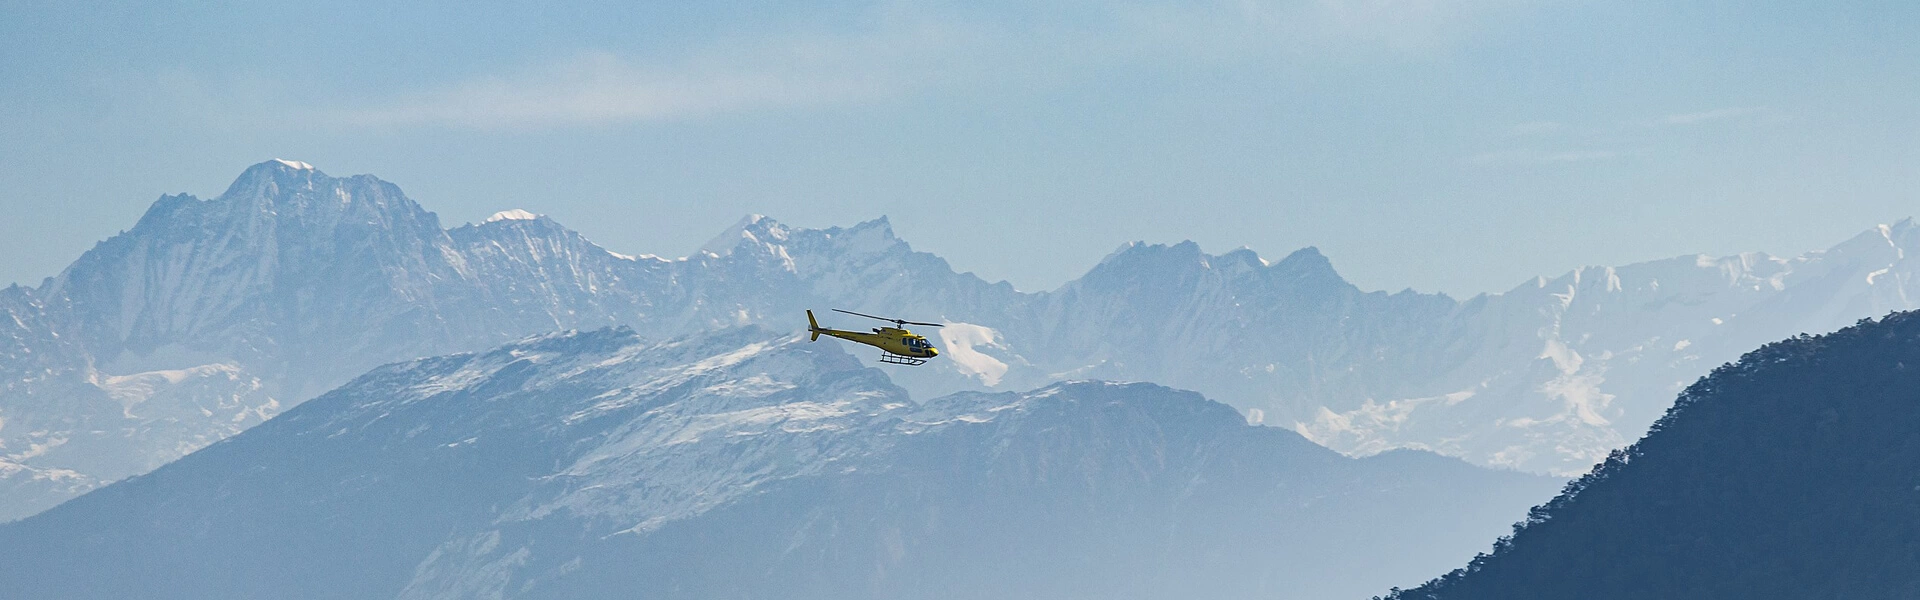 Langtang Gosaikunda Helicopter Tour for Nepali